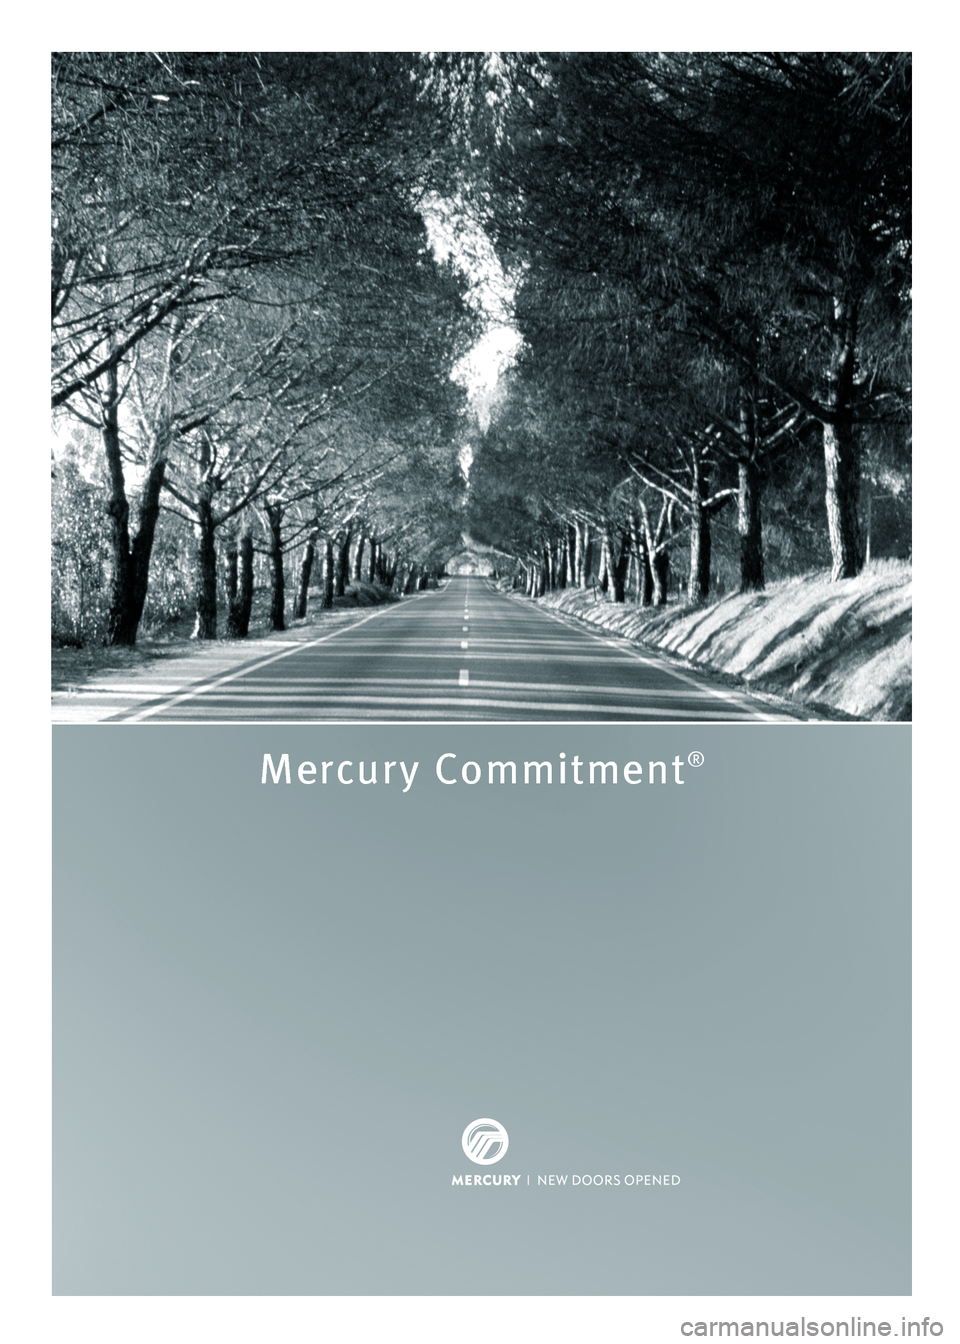 Mercury Milan 2008  Customer Assistance Guide Roadside Assistance
Mercury Commitment®
800 241-3673
Roadside Assistance
Mercury Commitment®
800 241-3673
8W3J 19328 AA 
April 2007 
First Printing
Mercury Commitment  Litho in U.S.A.
*8W3J_19328_AA